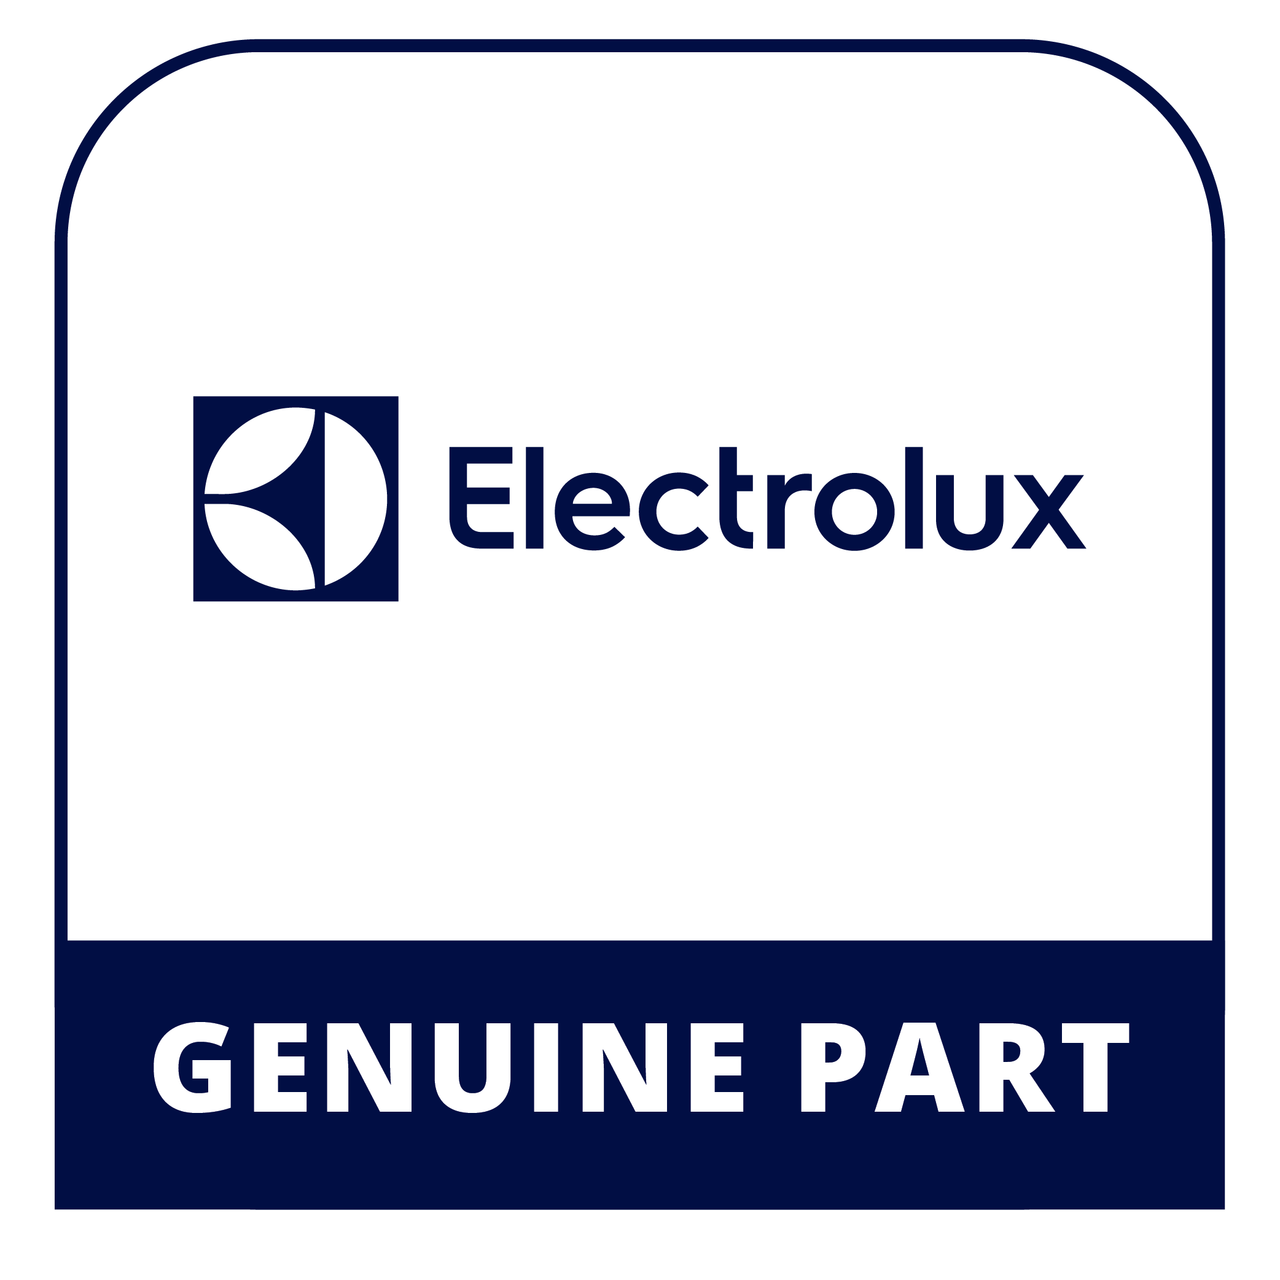 Frigidaire - Electrolux 316542403 Kit Assembly - Genuine Electrolux Part